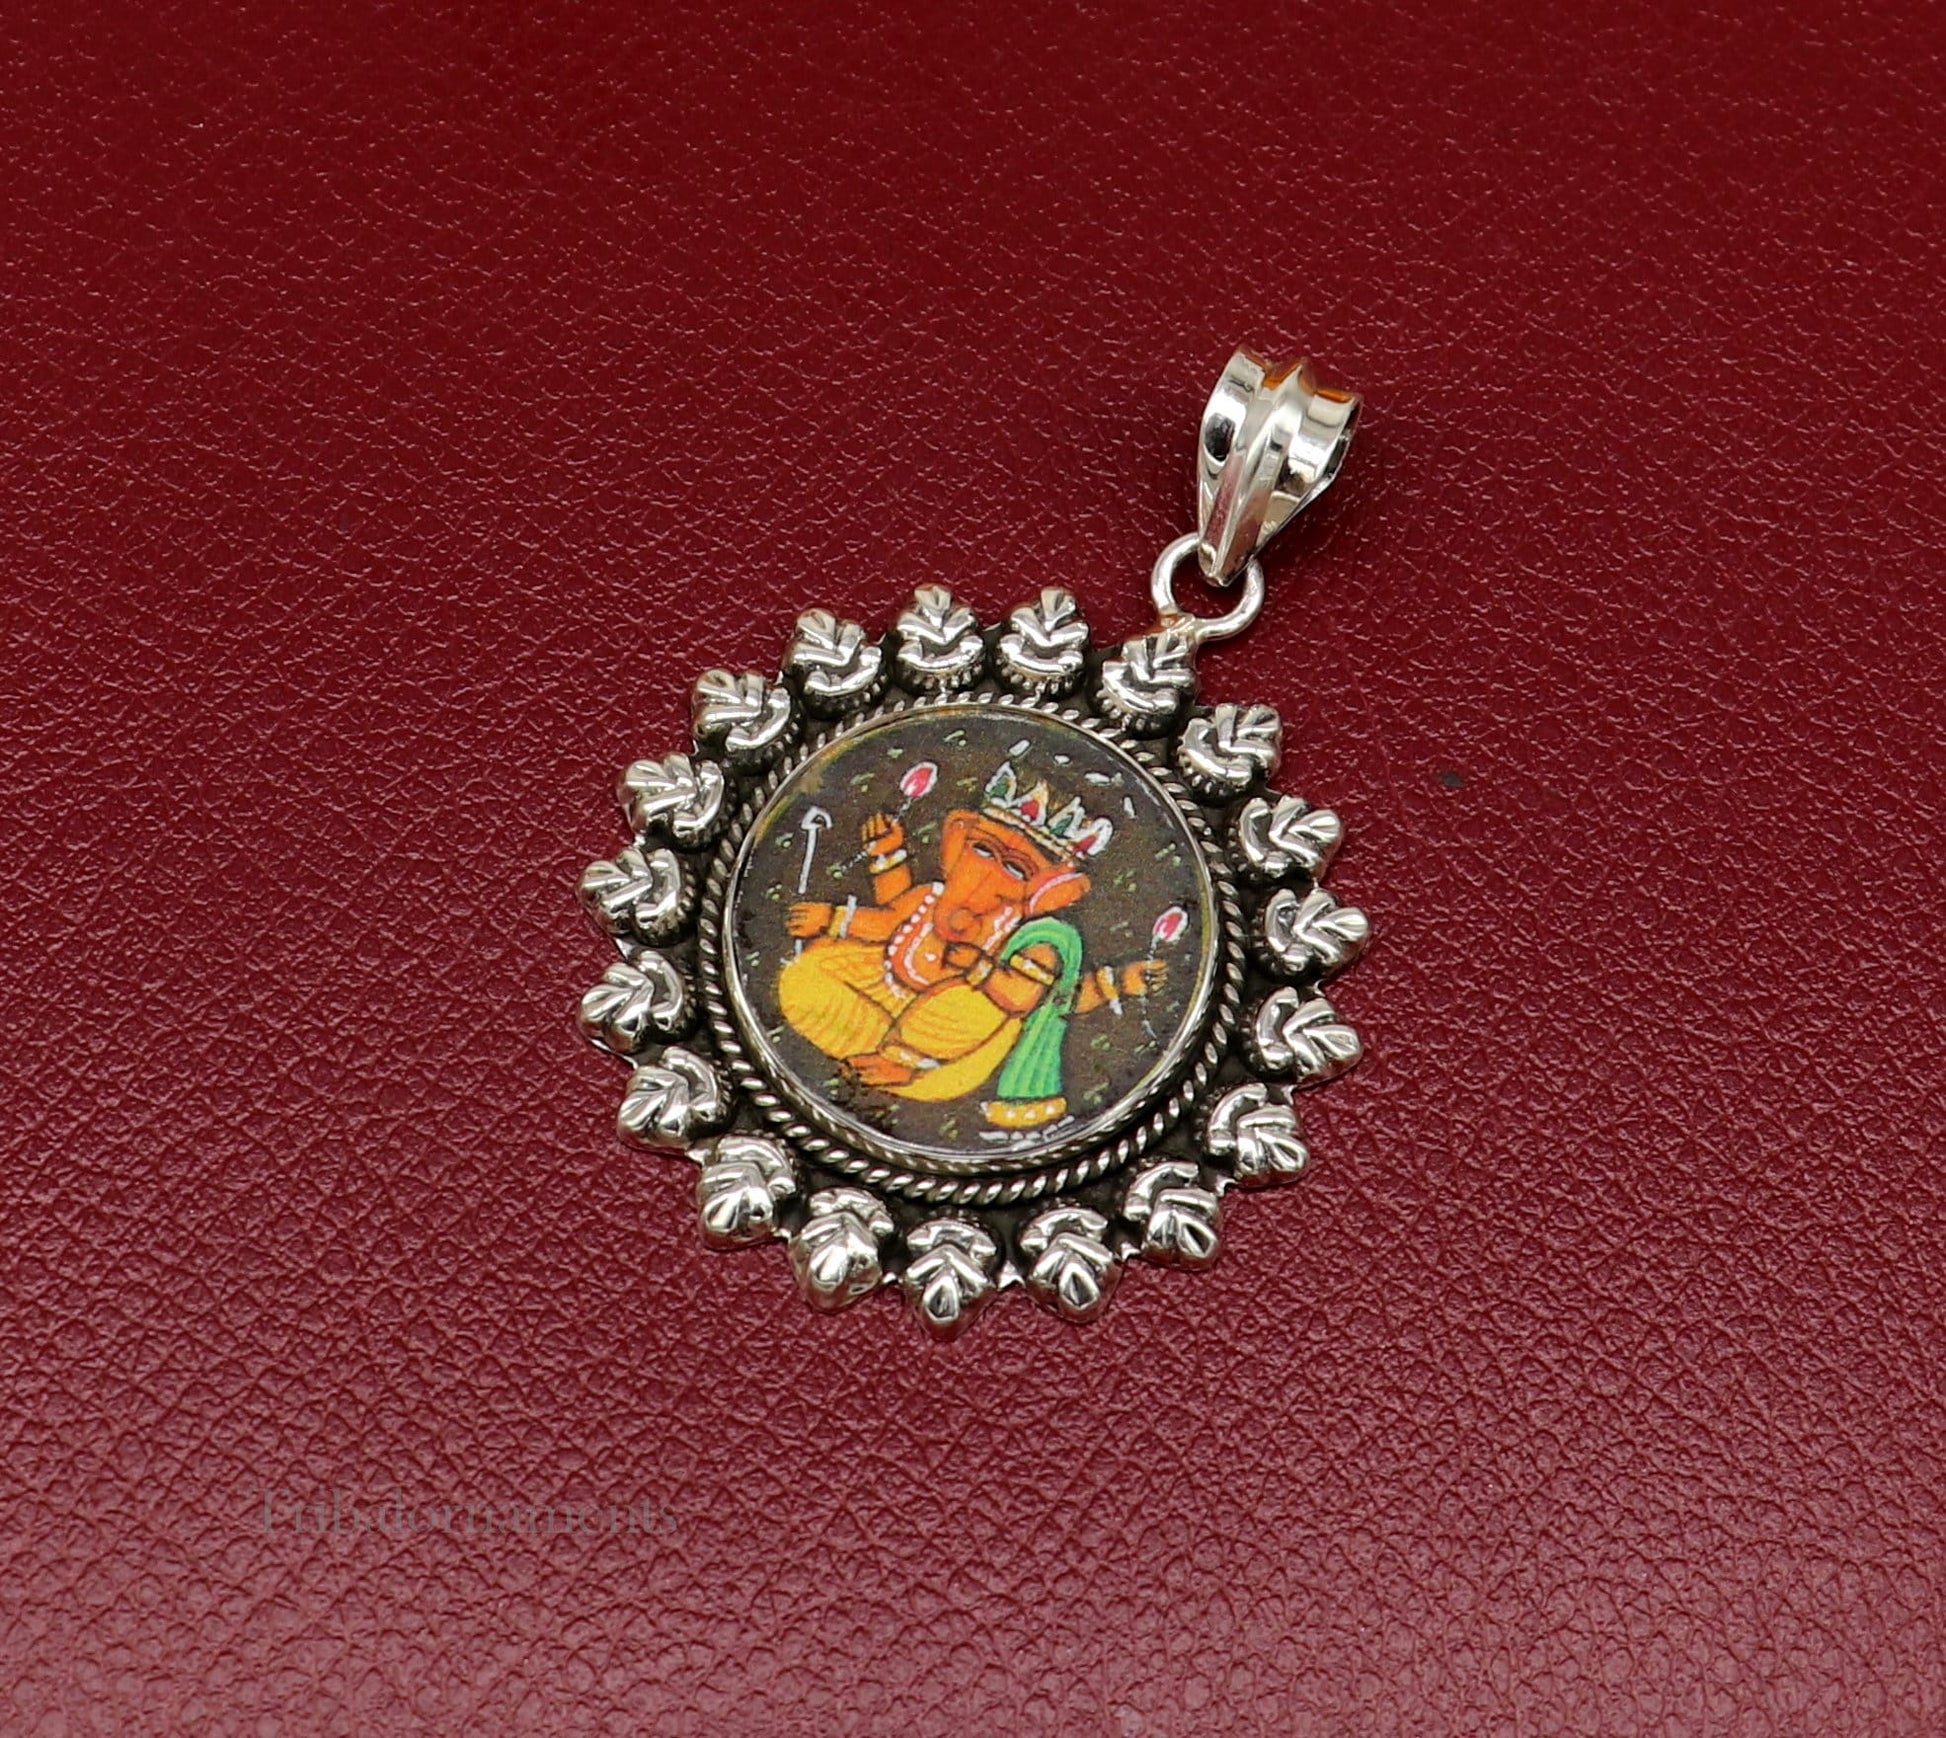 Hindu deity 92.5 Sterling Silver Hand Painted Miniature Art Painting photo God Ganesha Glass Framed Pendant ethnic stylish jewelry ssp814 - TRIBAL ORNAMENTS